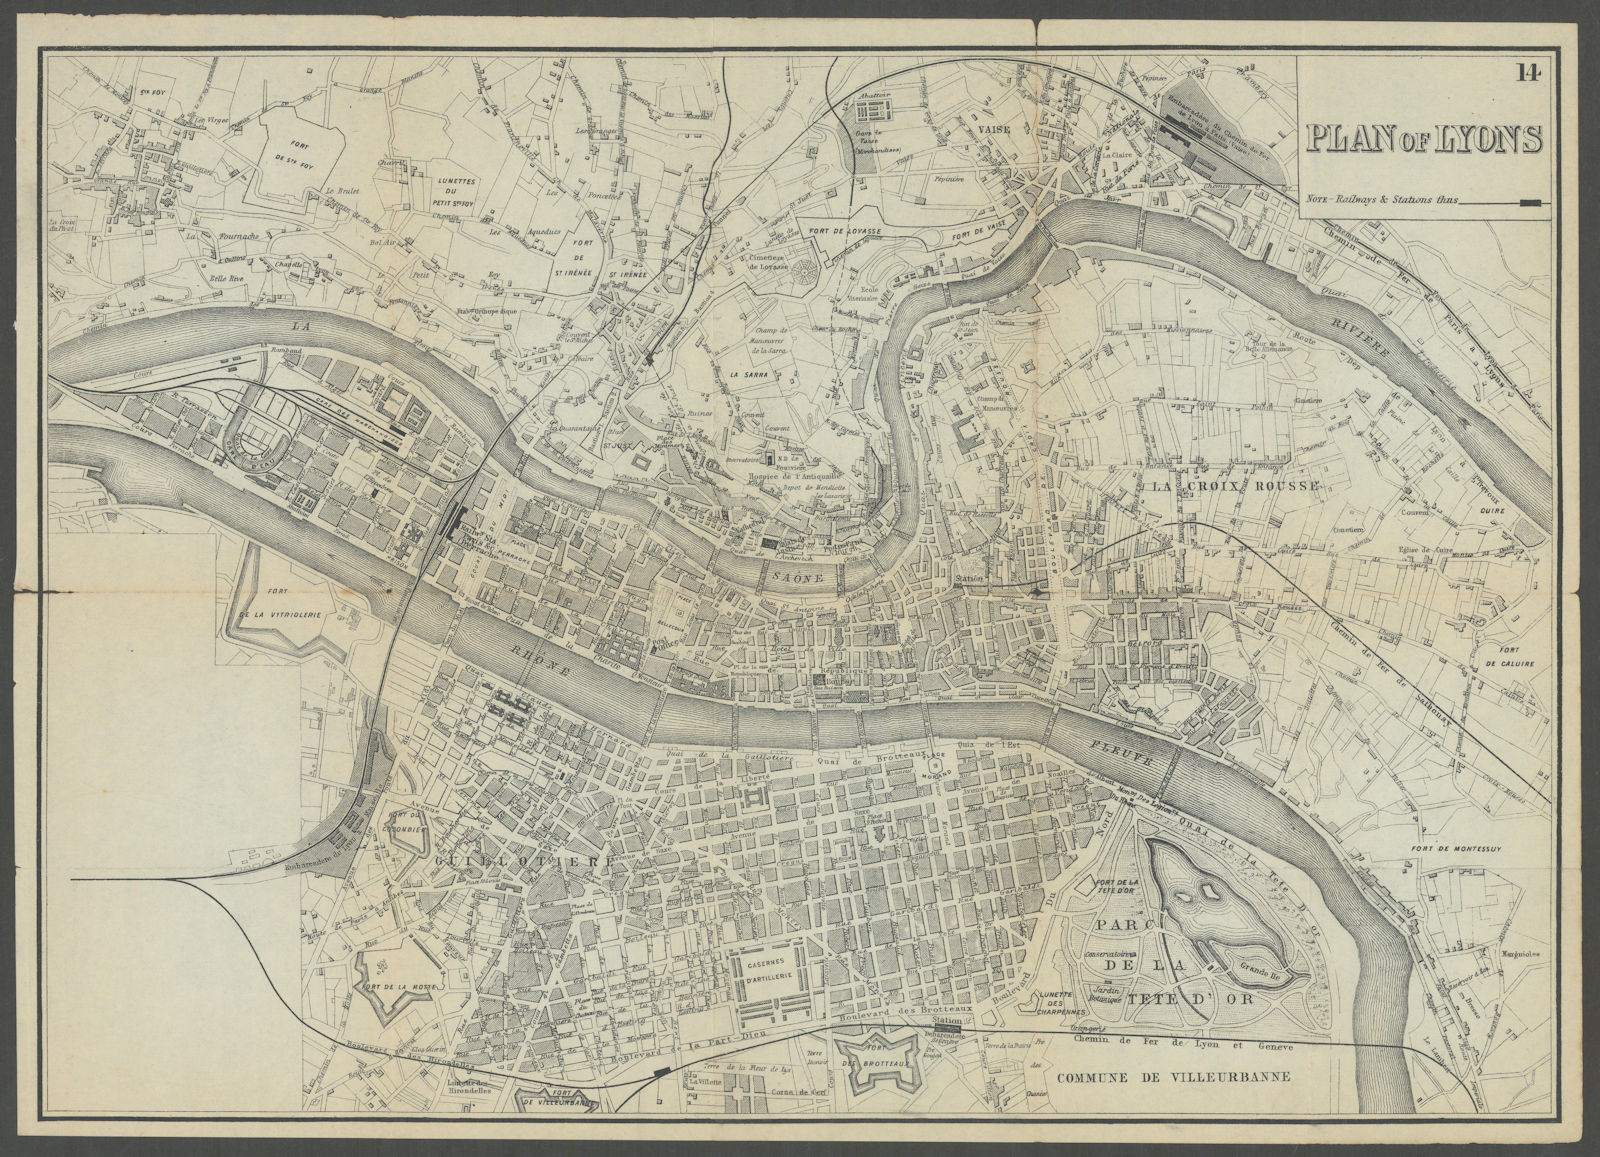 Associate Product LYONS LYON antique town plan city map. France. BRADSHAW c1899 old